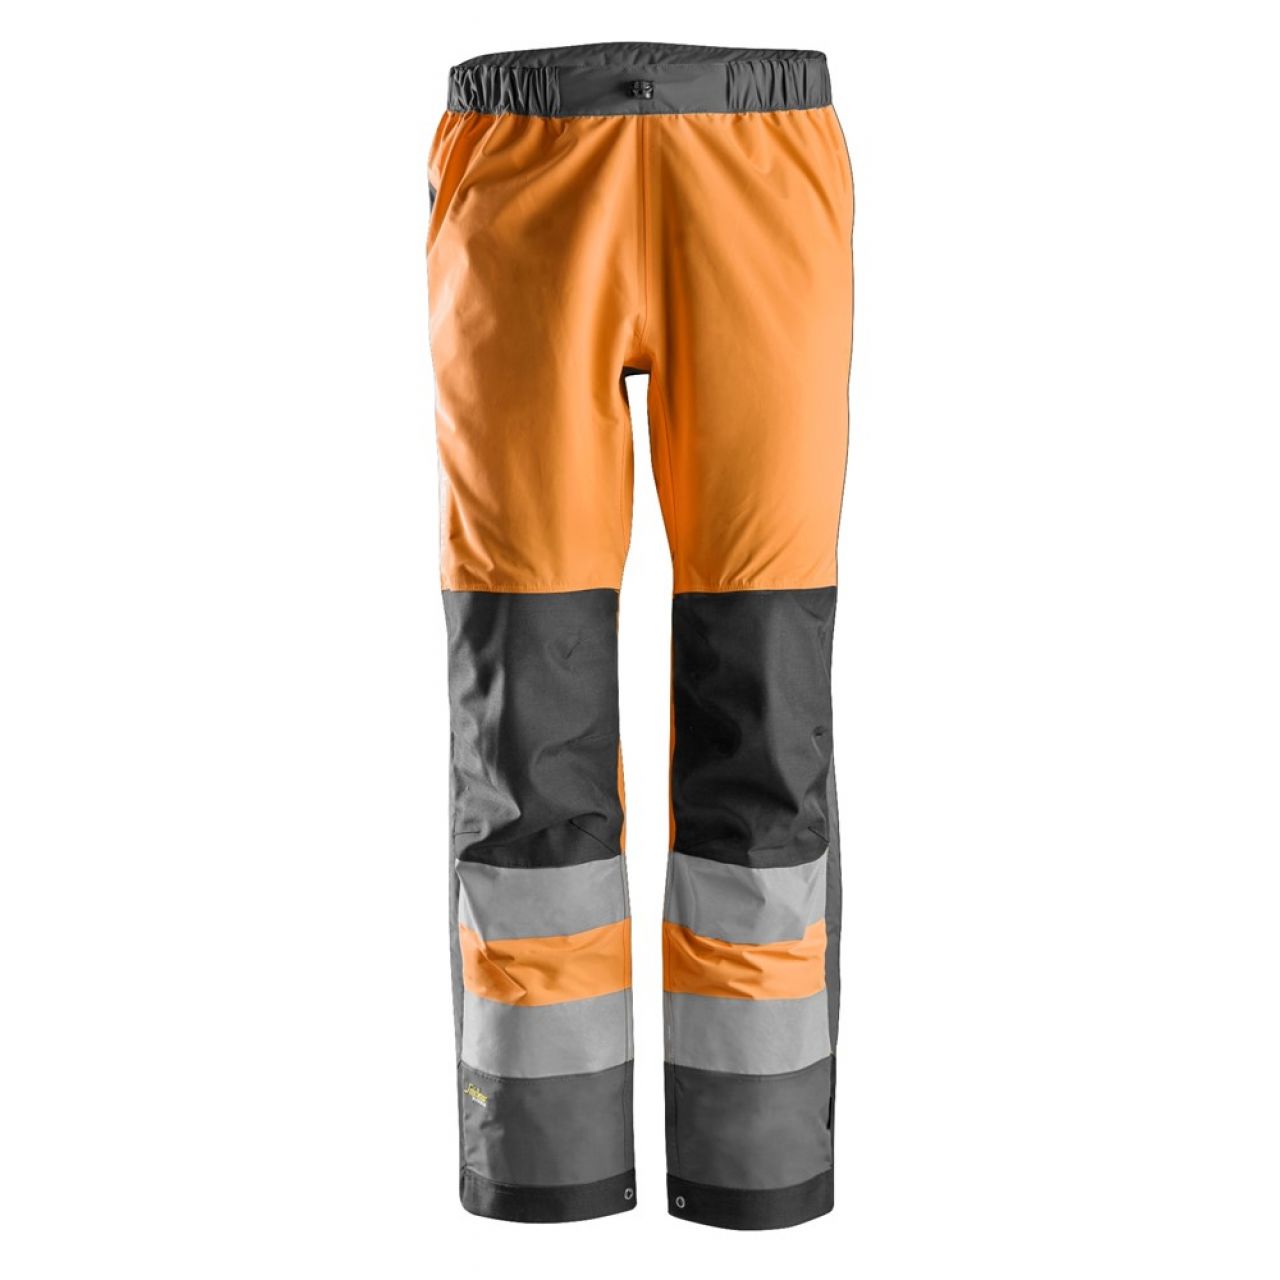 6530 Pantalones largos de trabajo impermeables Waterproof Shell de alta visibilidad clase 2 AllroundWork naranja-gris acero talla XXL